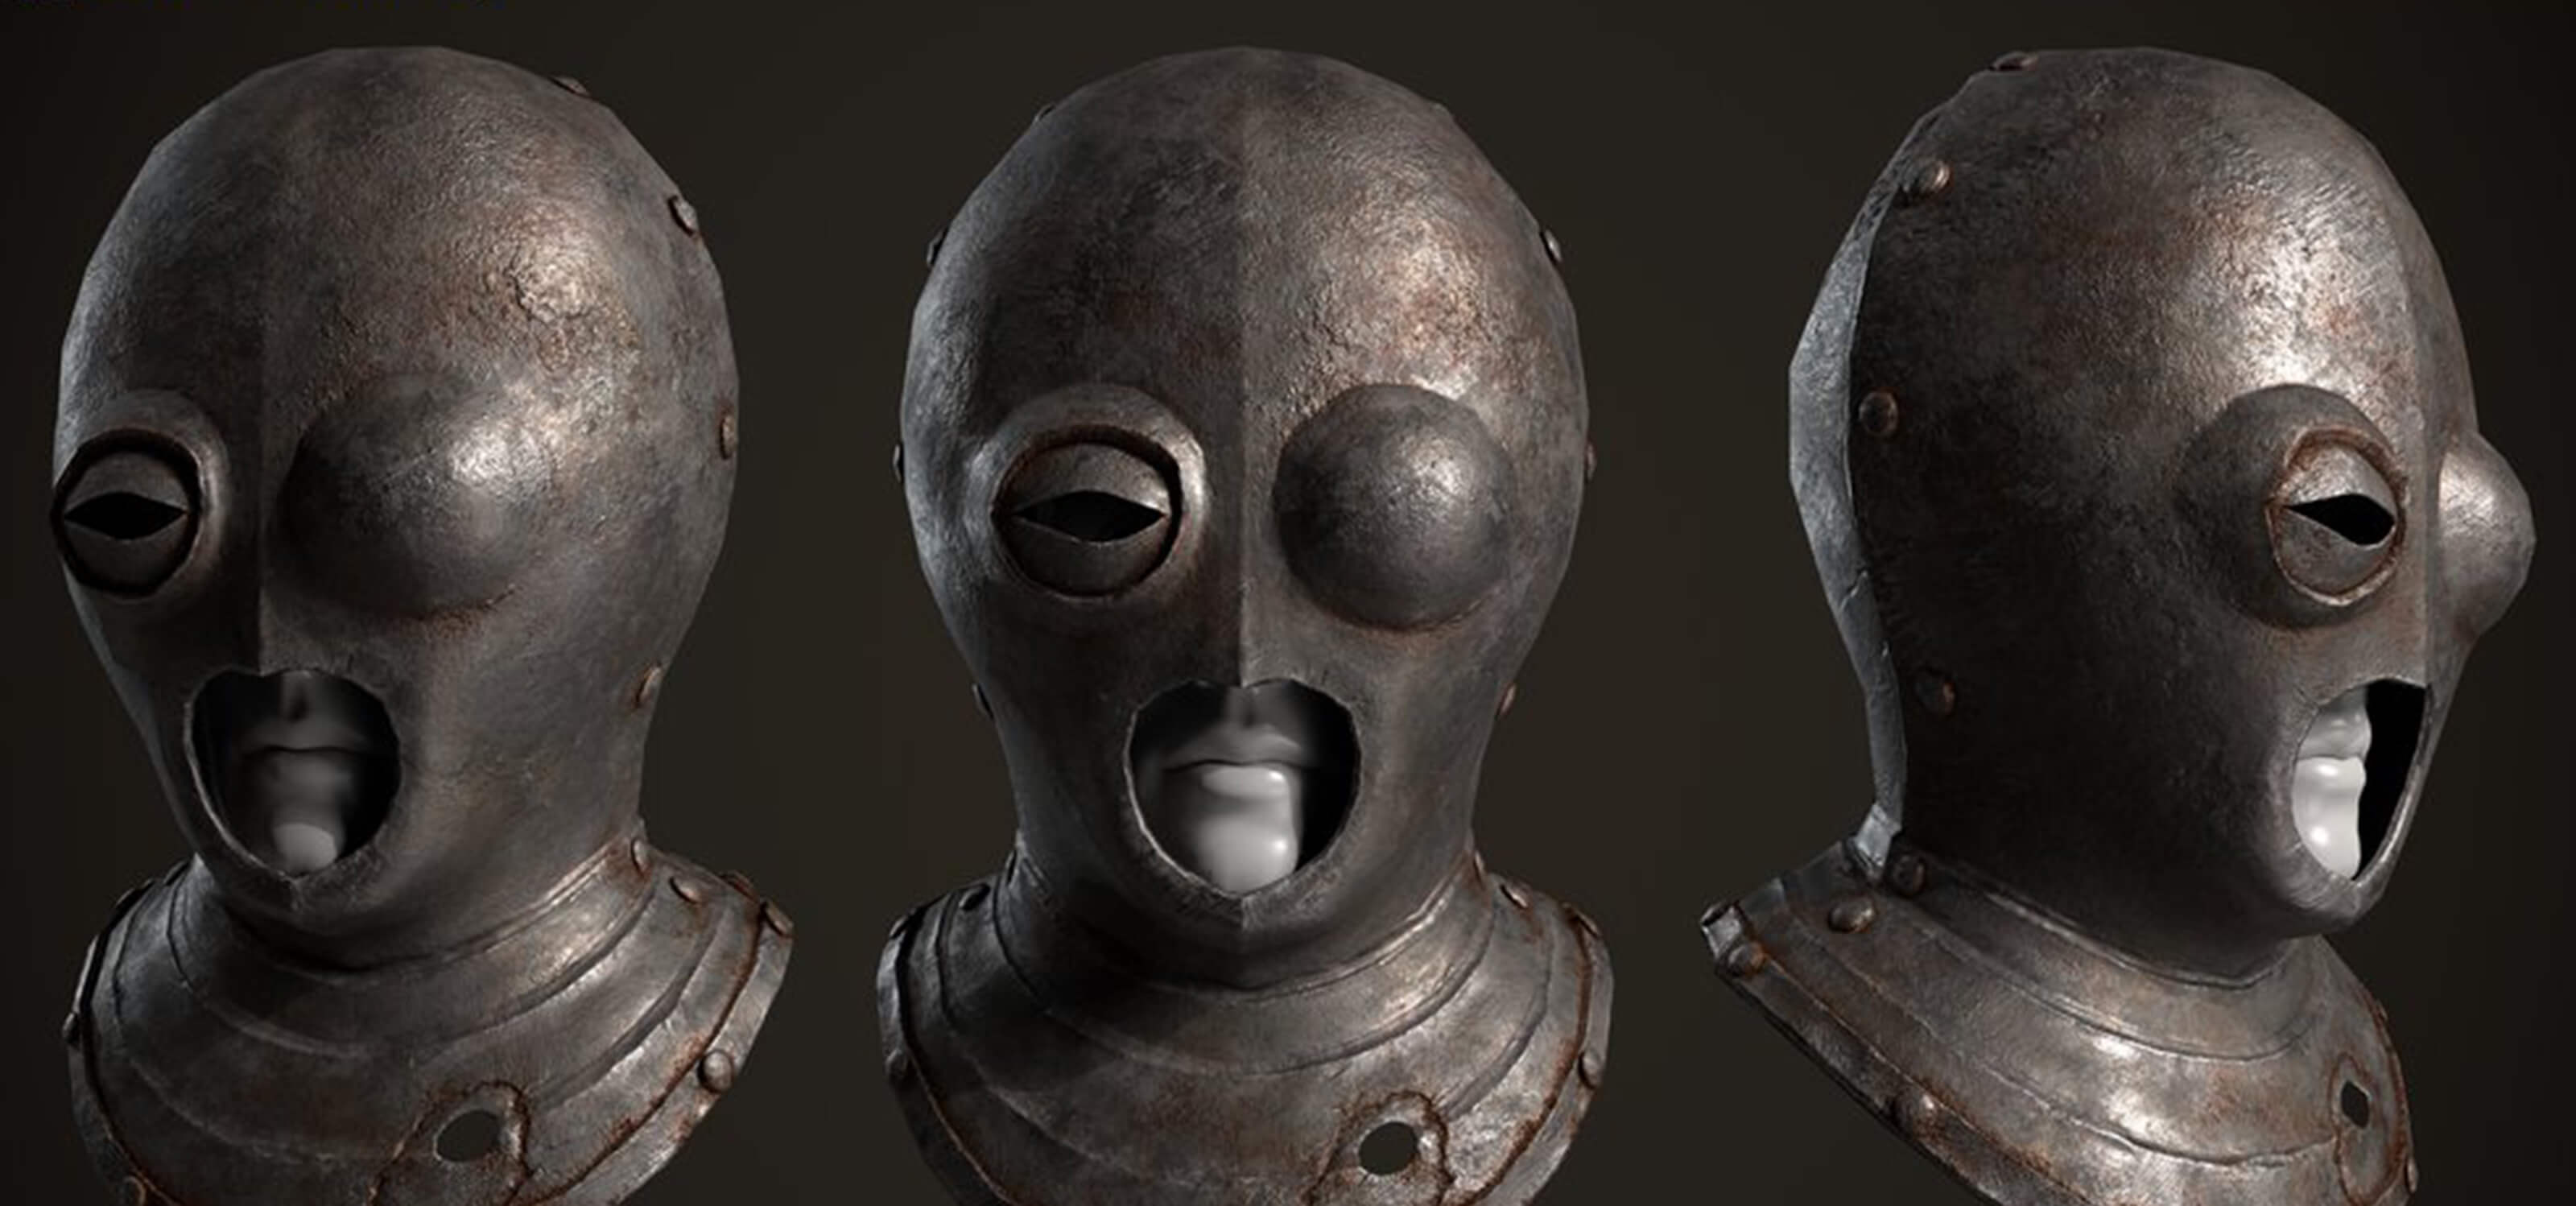 Cal Santiago’s 3D render turnaround of the Prisoner Iron Mask from Elden Ring.